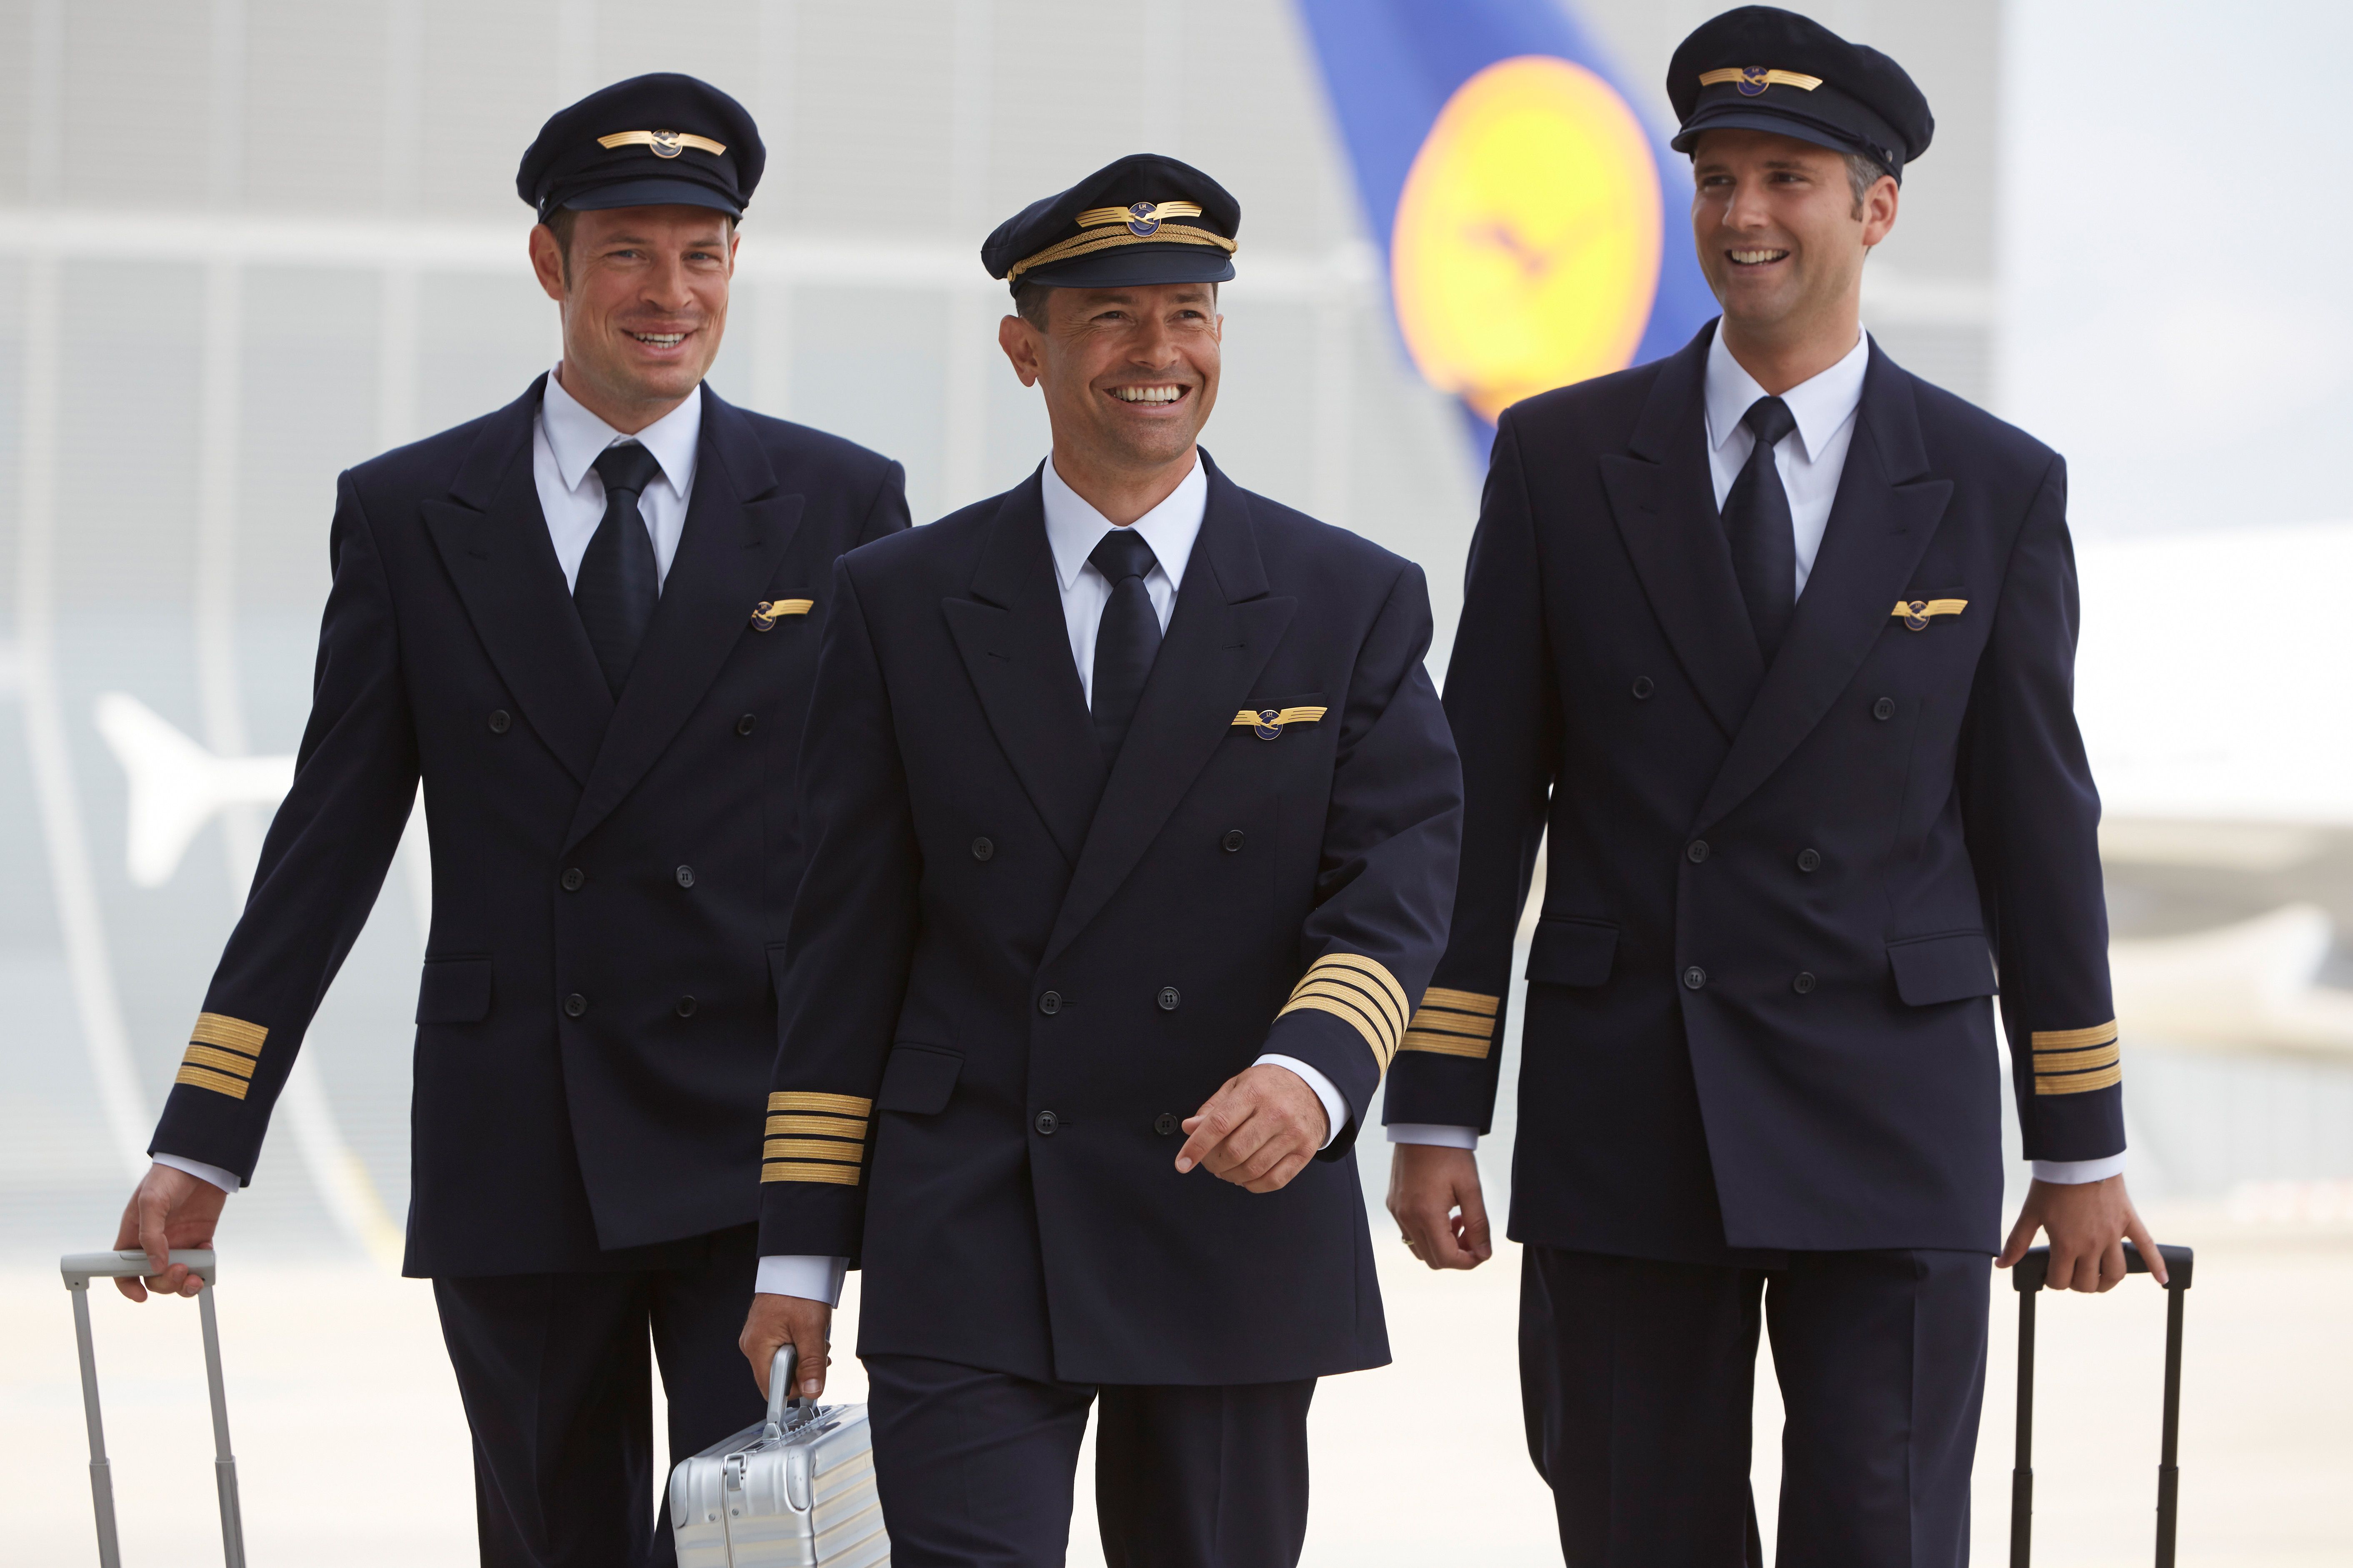 Lufthansa pilots